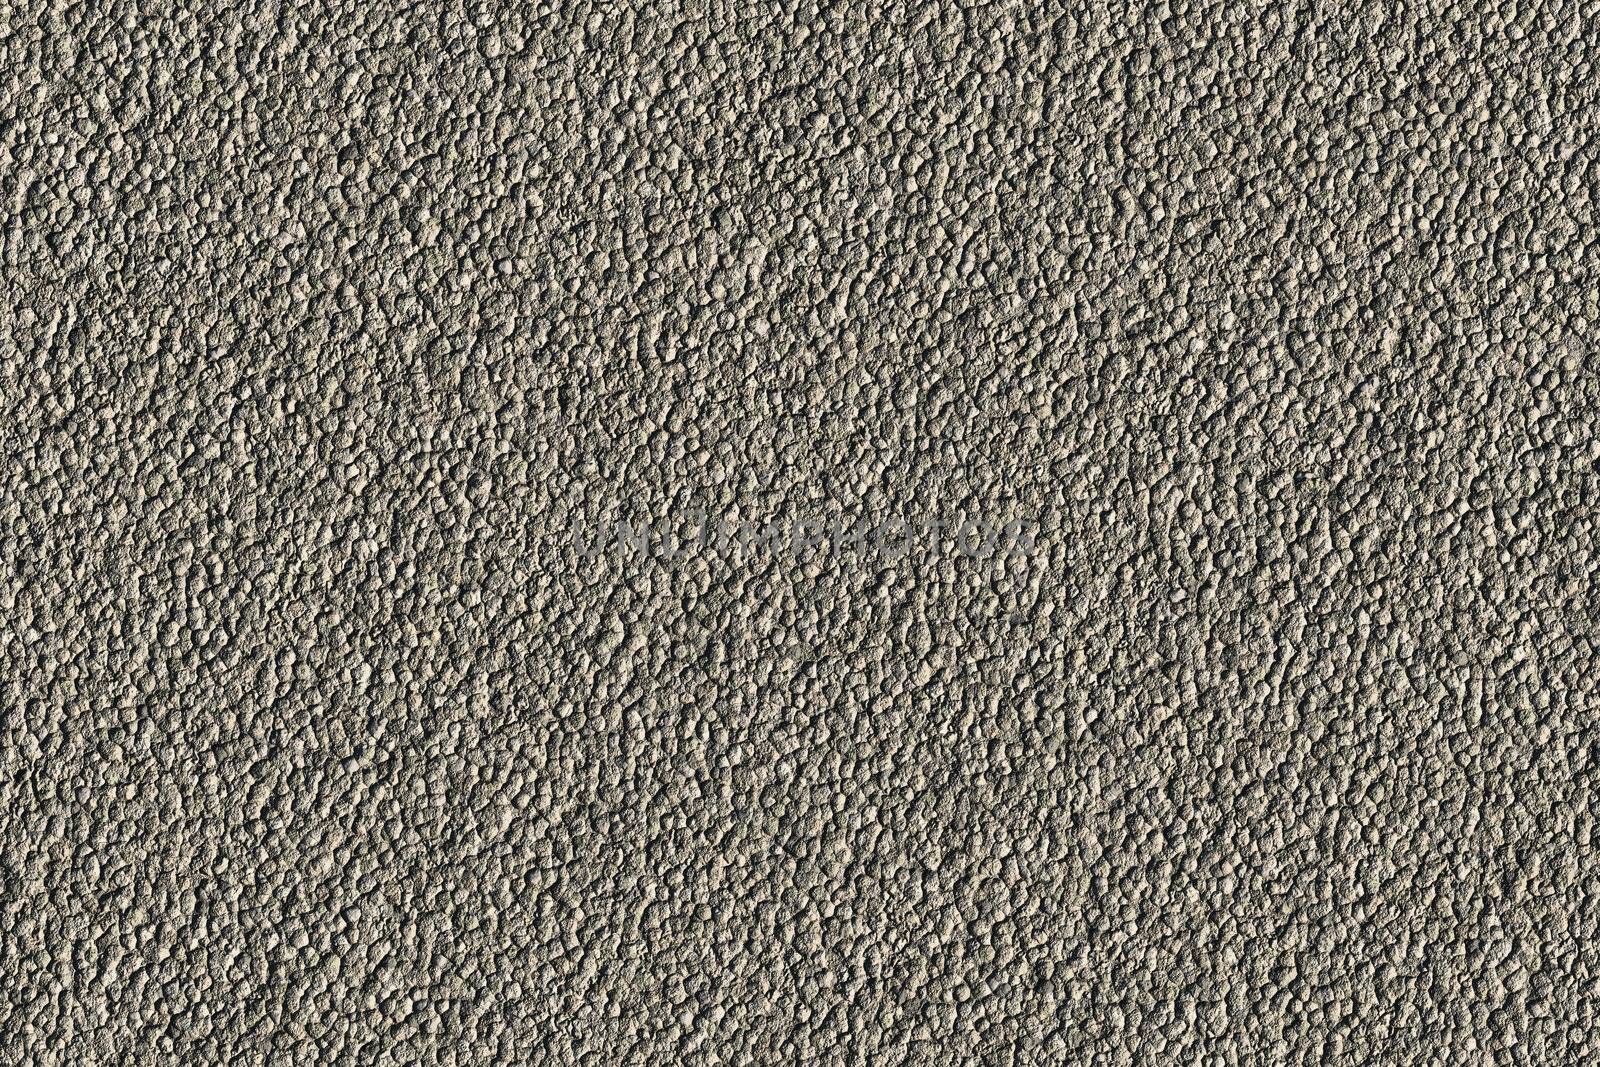 High quality close up asphalt background